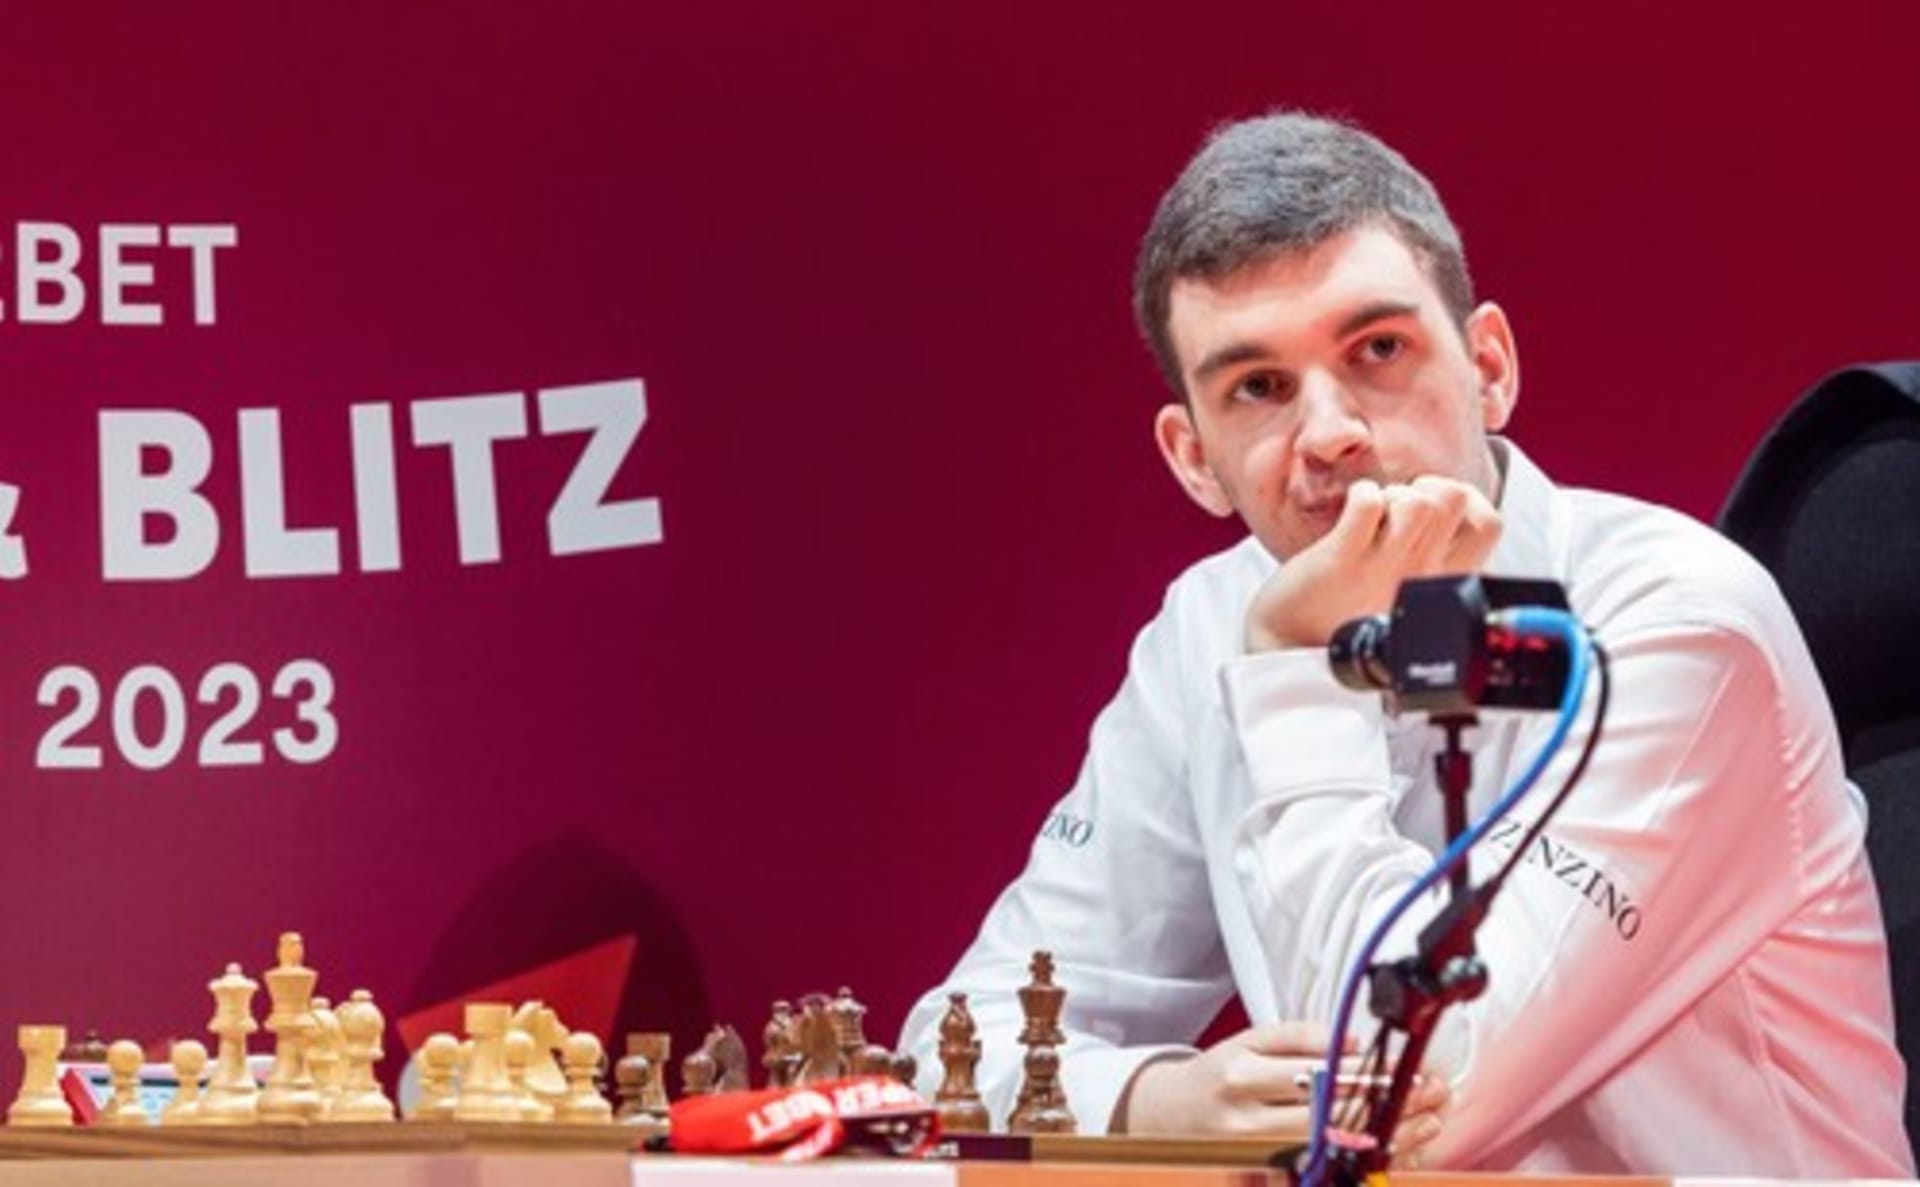 Polský šachový velmistr Jan-Krzysztof Duda